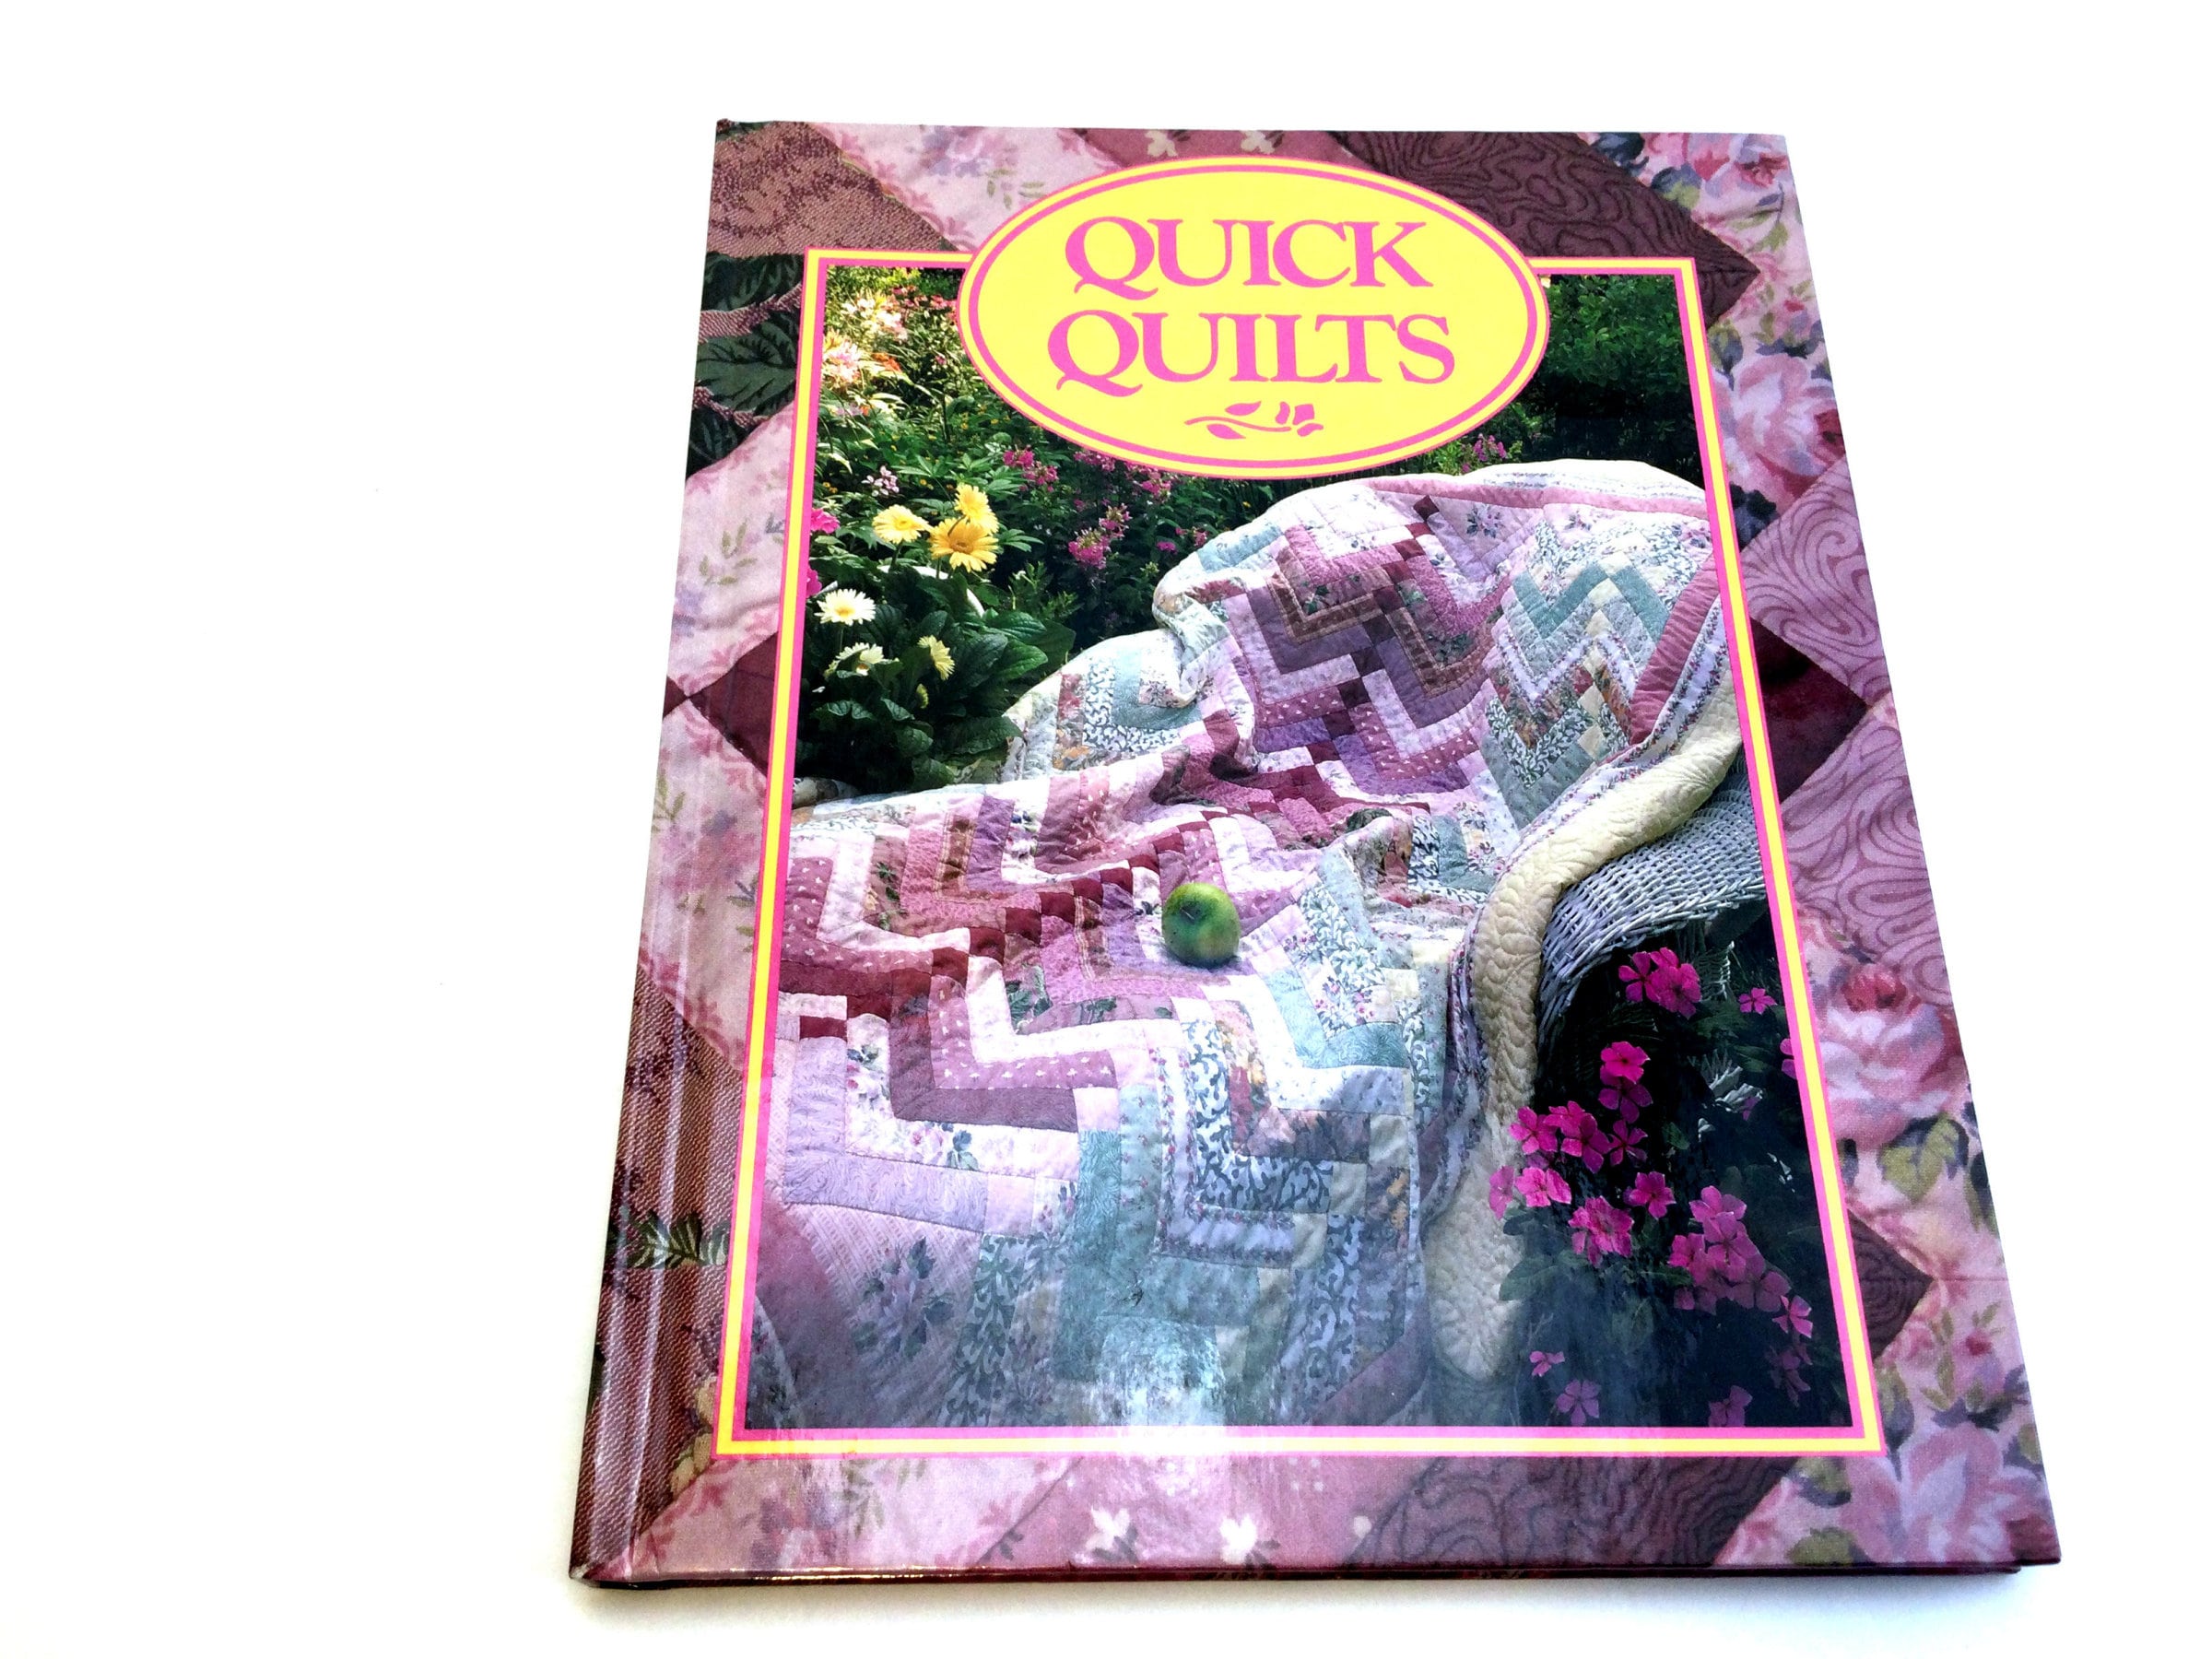  Leisure Arts Quilt Book - Ultimate Sunbonnet Sue Quilting  Patterns Collection Quilt Book – Quilting Books with Twenty-Four Applique  Block Quilt Patterns : Leisure Arts, Inc.: Arts, Crafts & Sewing